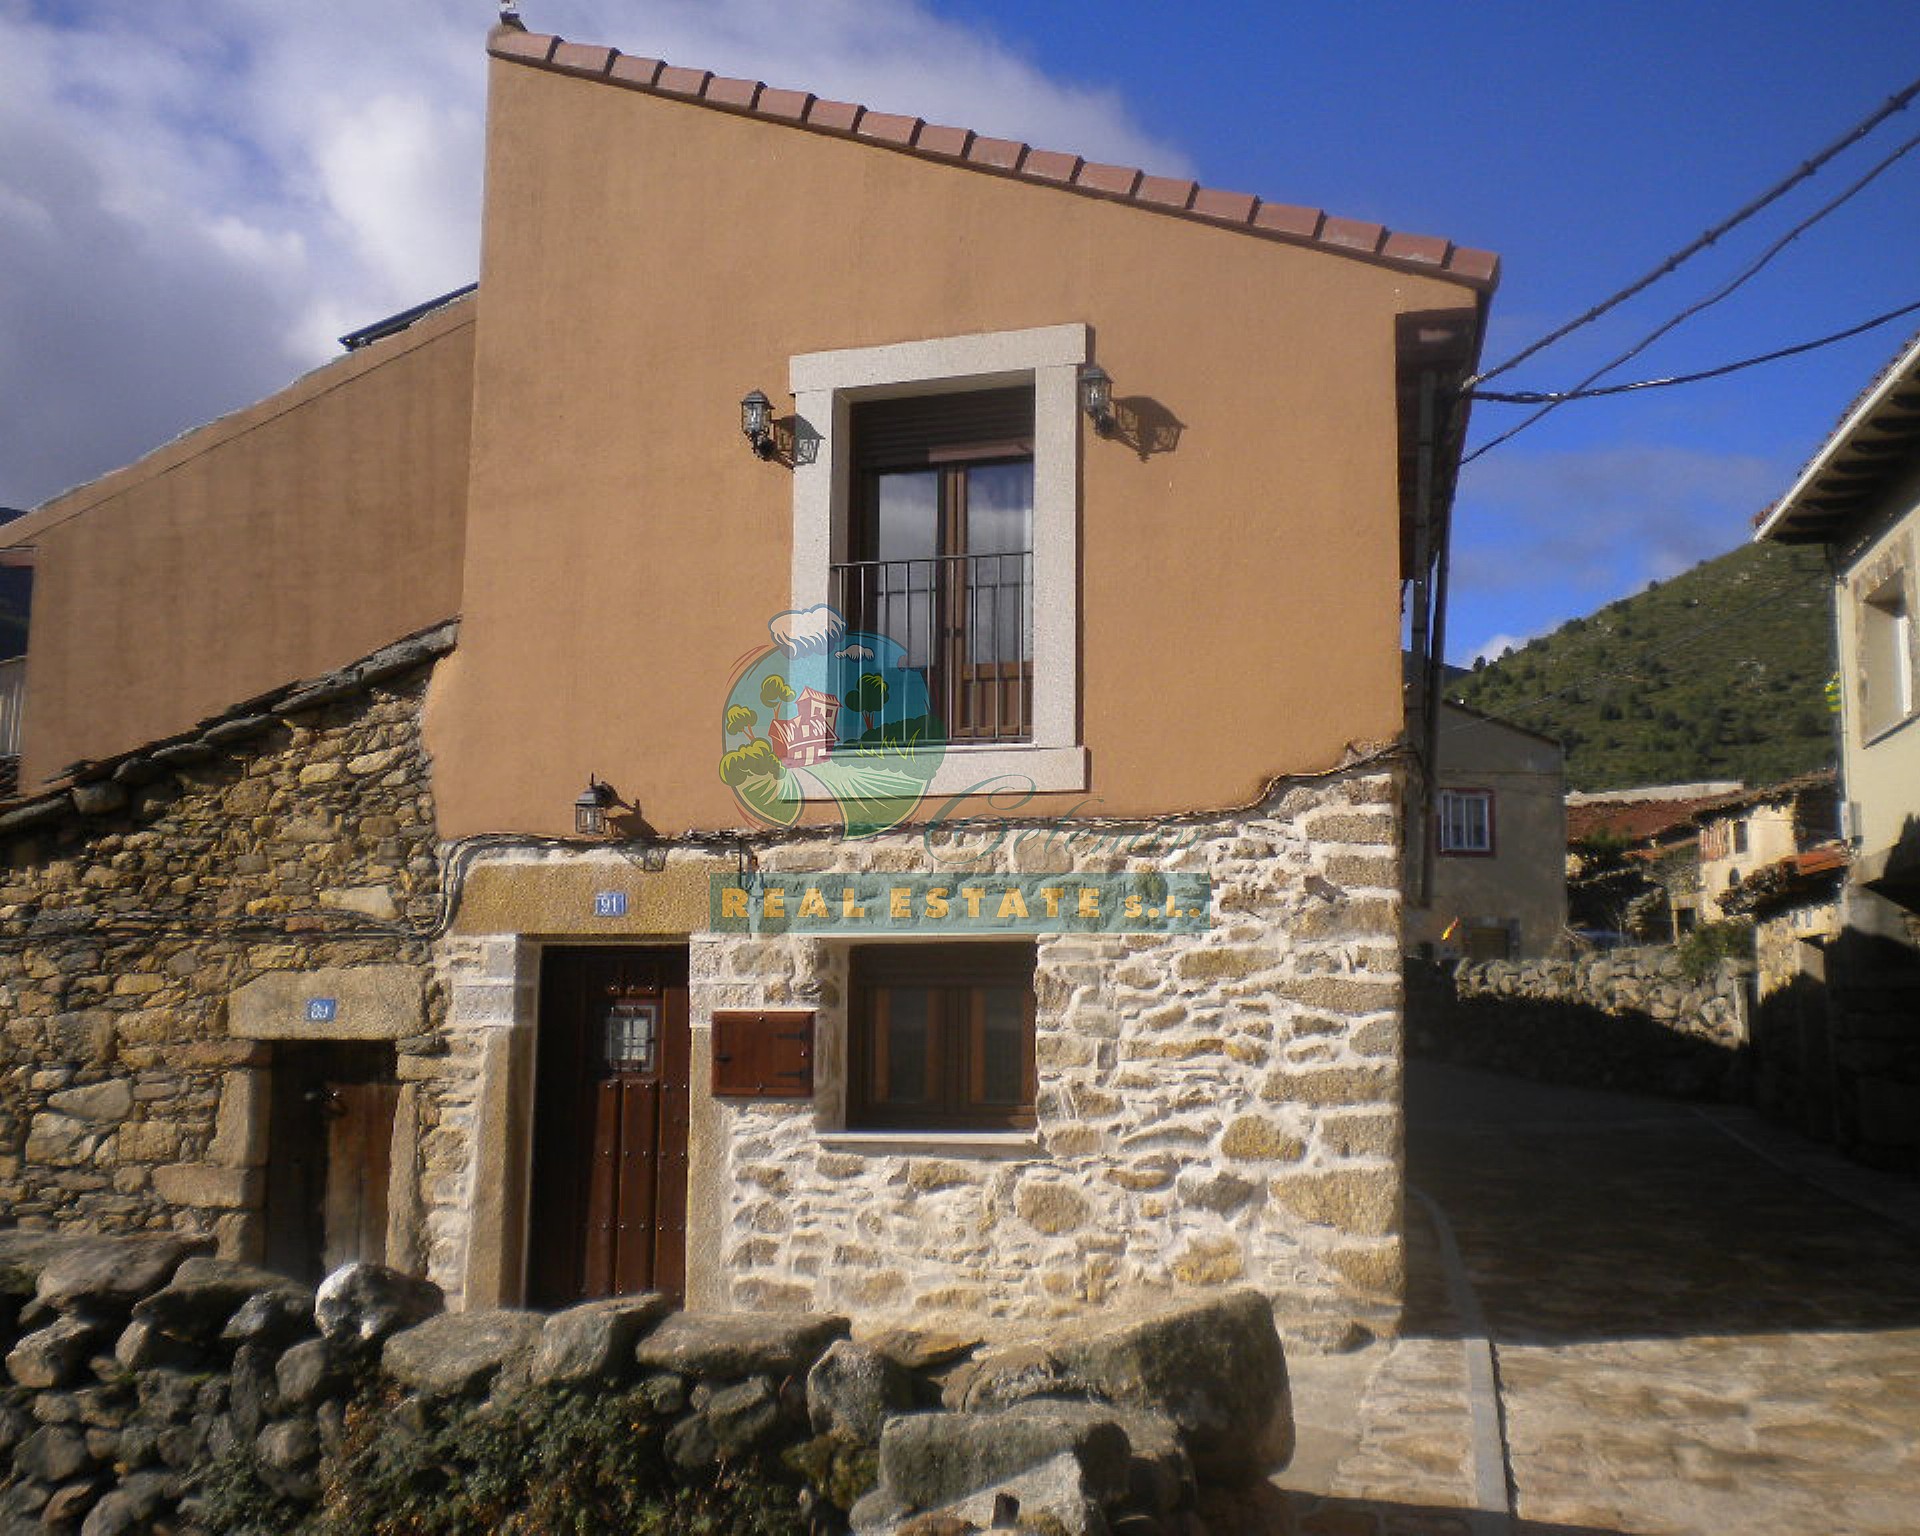 Charming house in Sierra de Gredos.